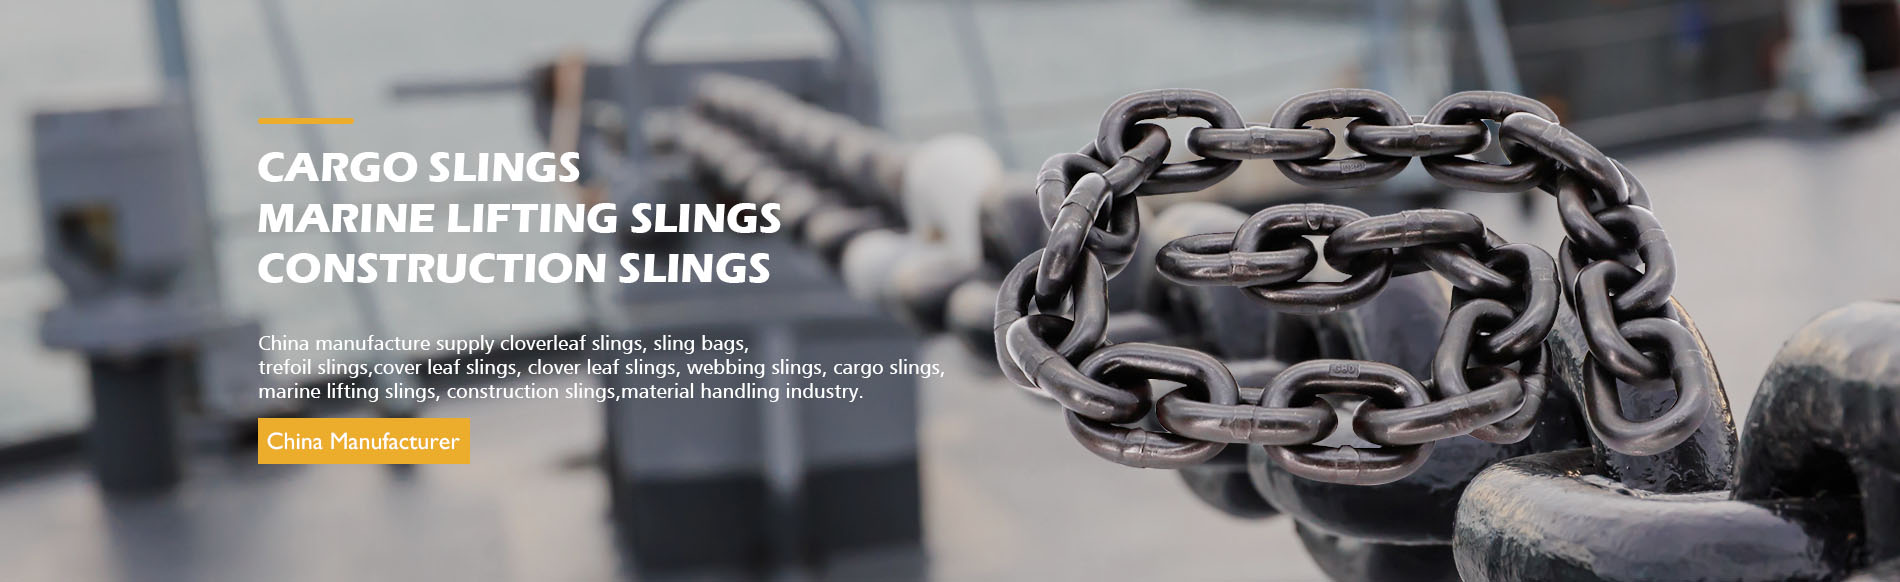 Marine Lifting Slings